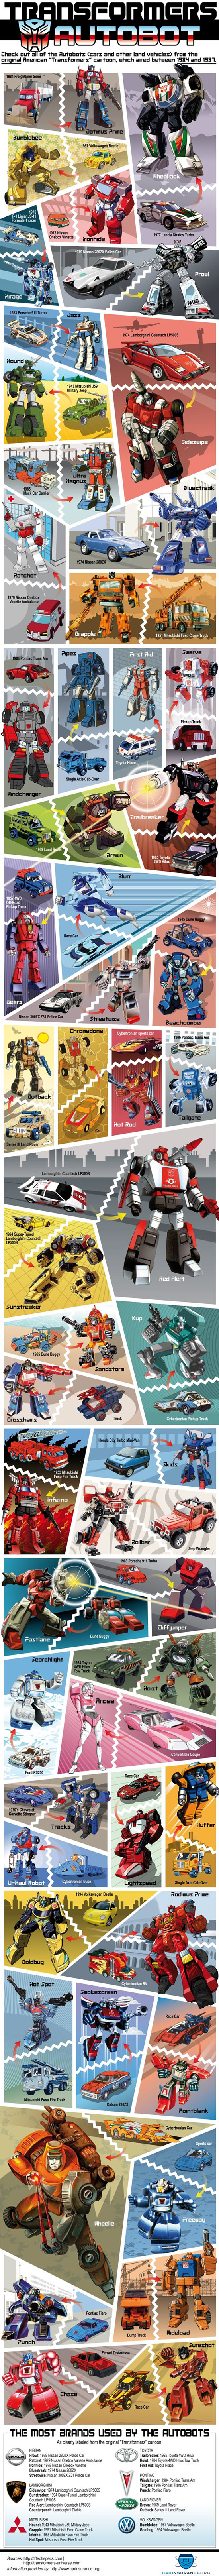 Transformers Autobot